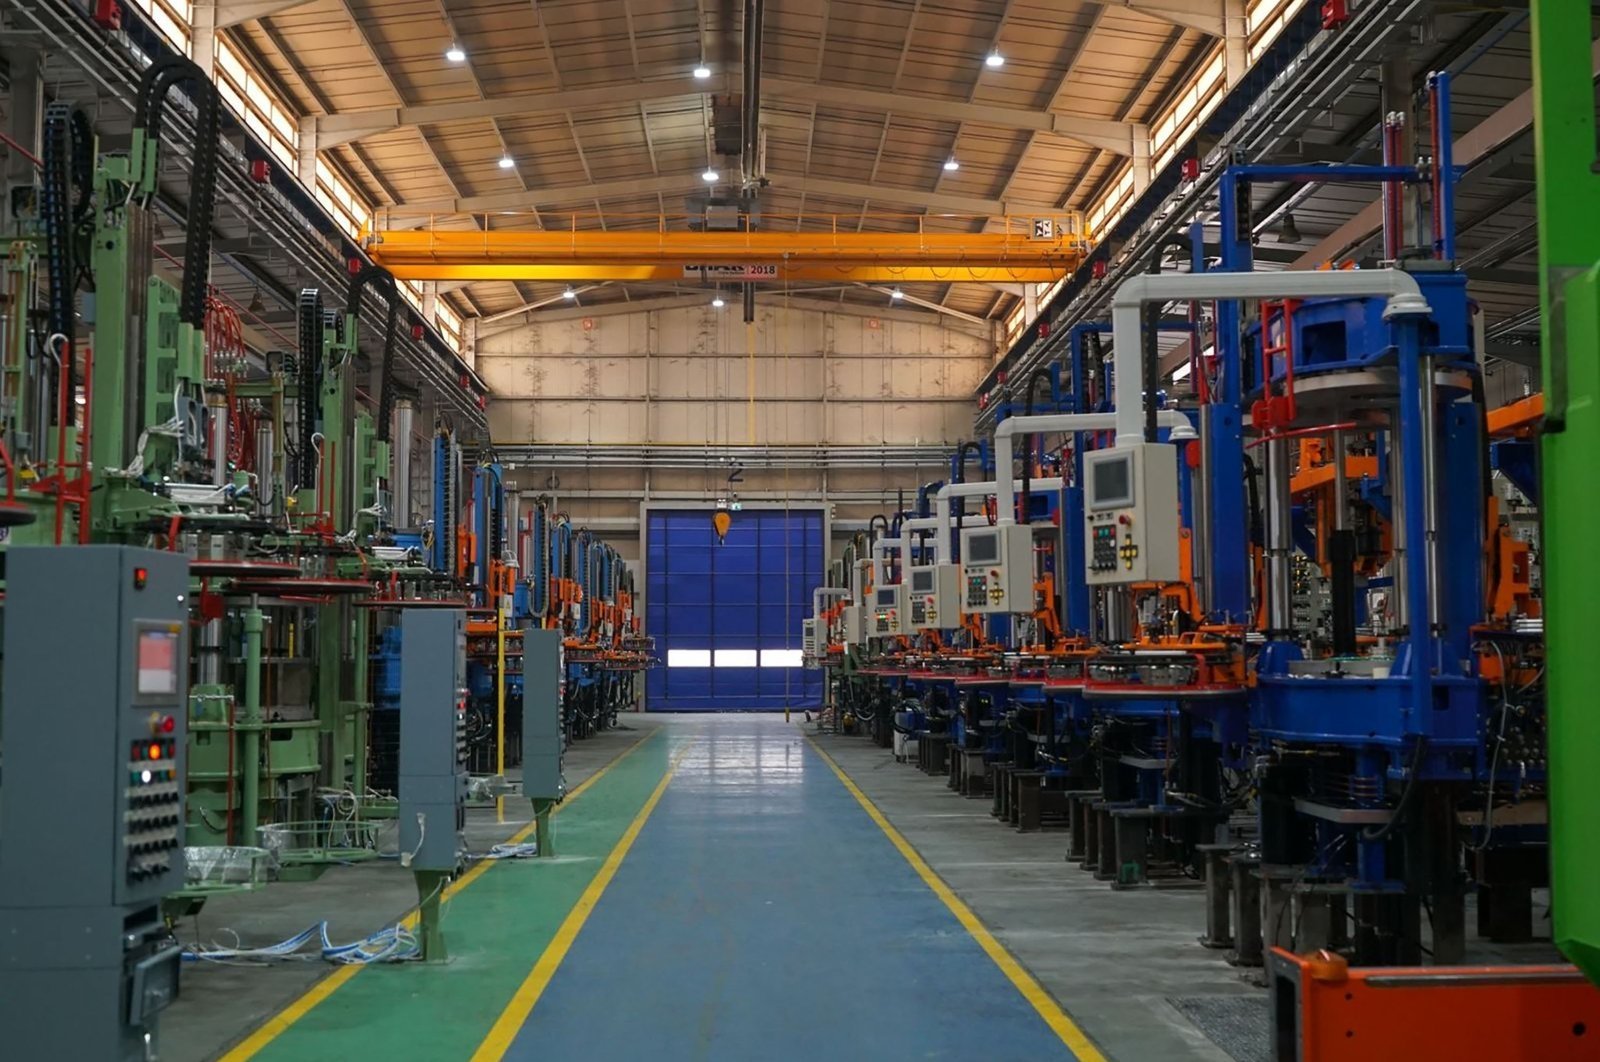 A mold press machinery factory in the Arslanbey Organized Industrial Zone in Kocaeli, northwestern Turkey, June 26, 2020. (Sabah Photo)